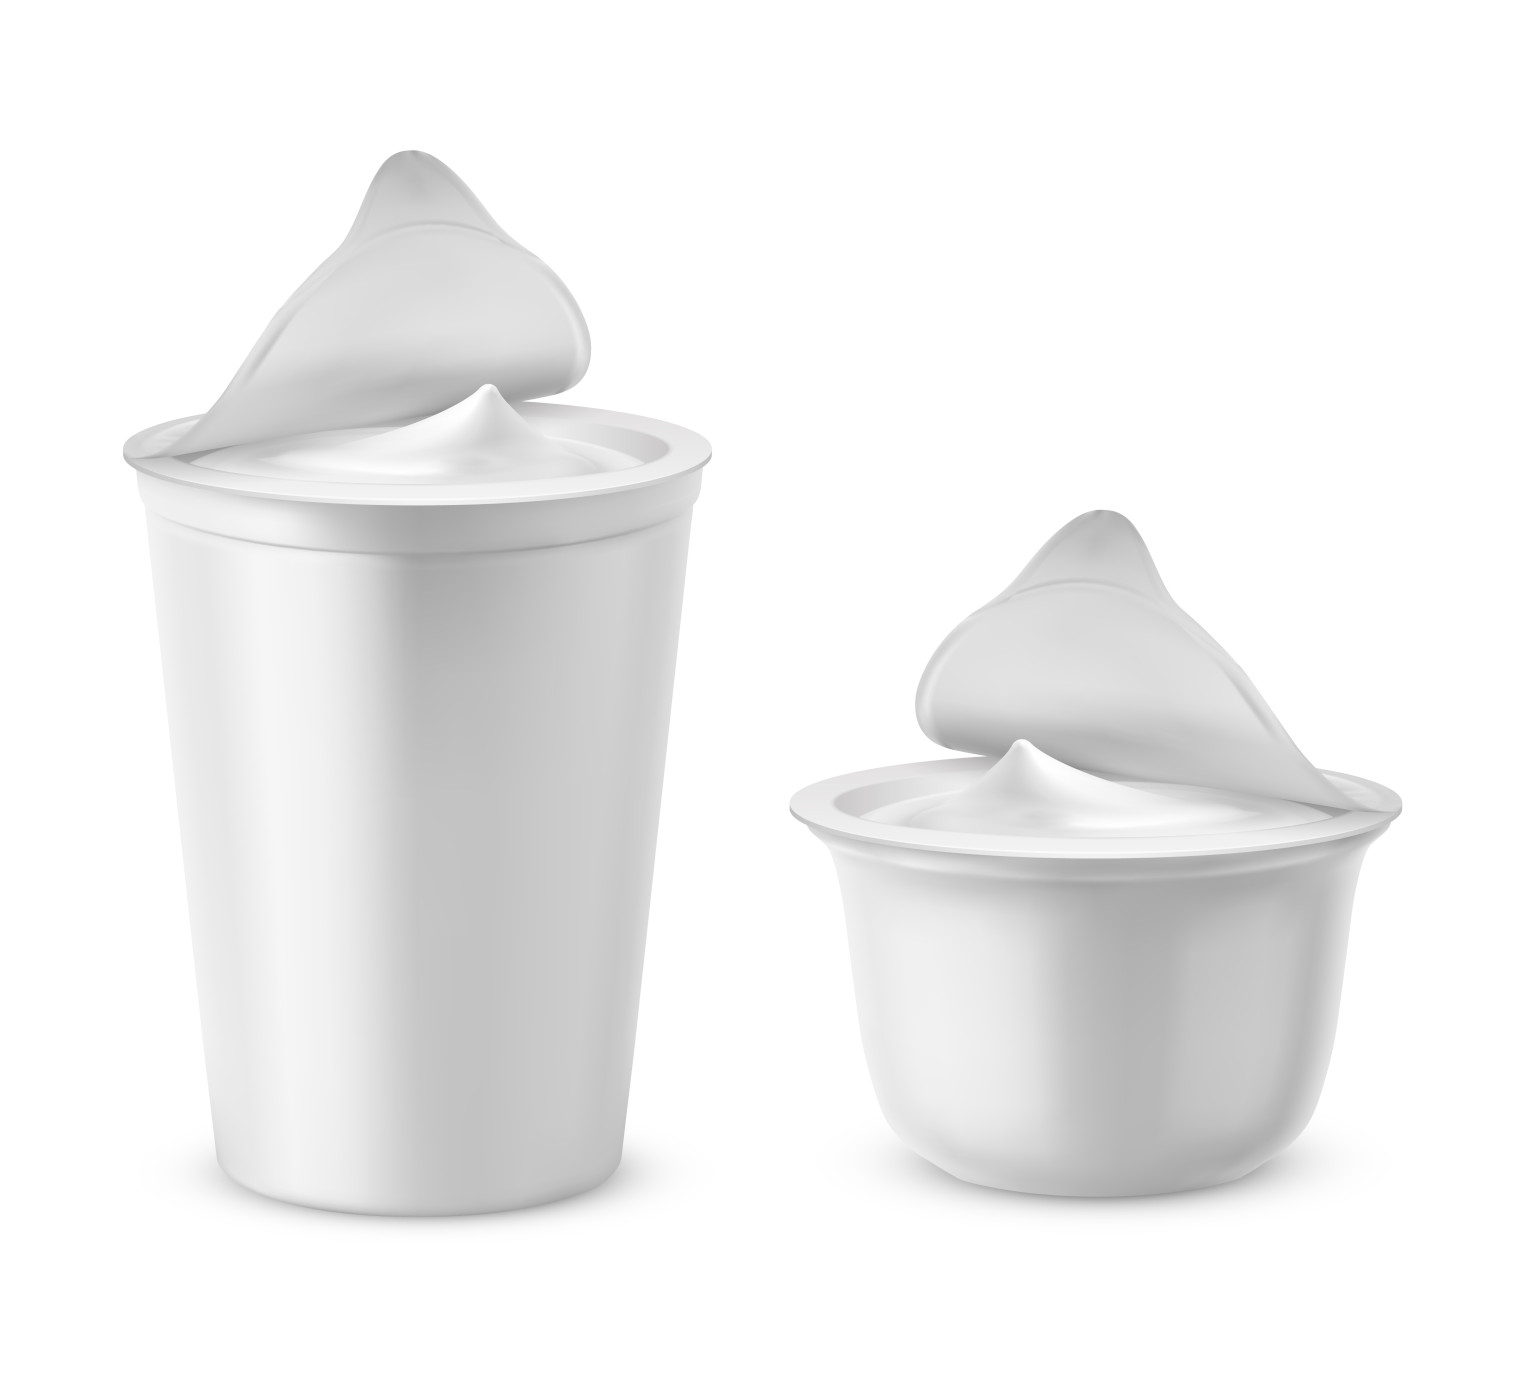 Yogurt pots